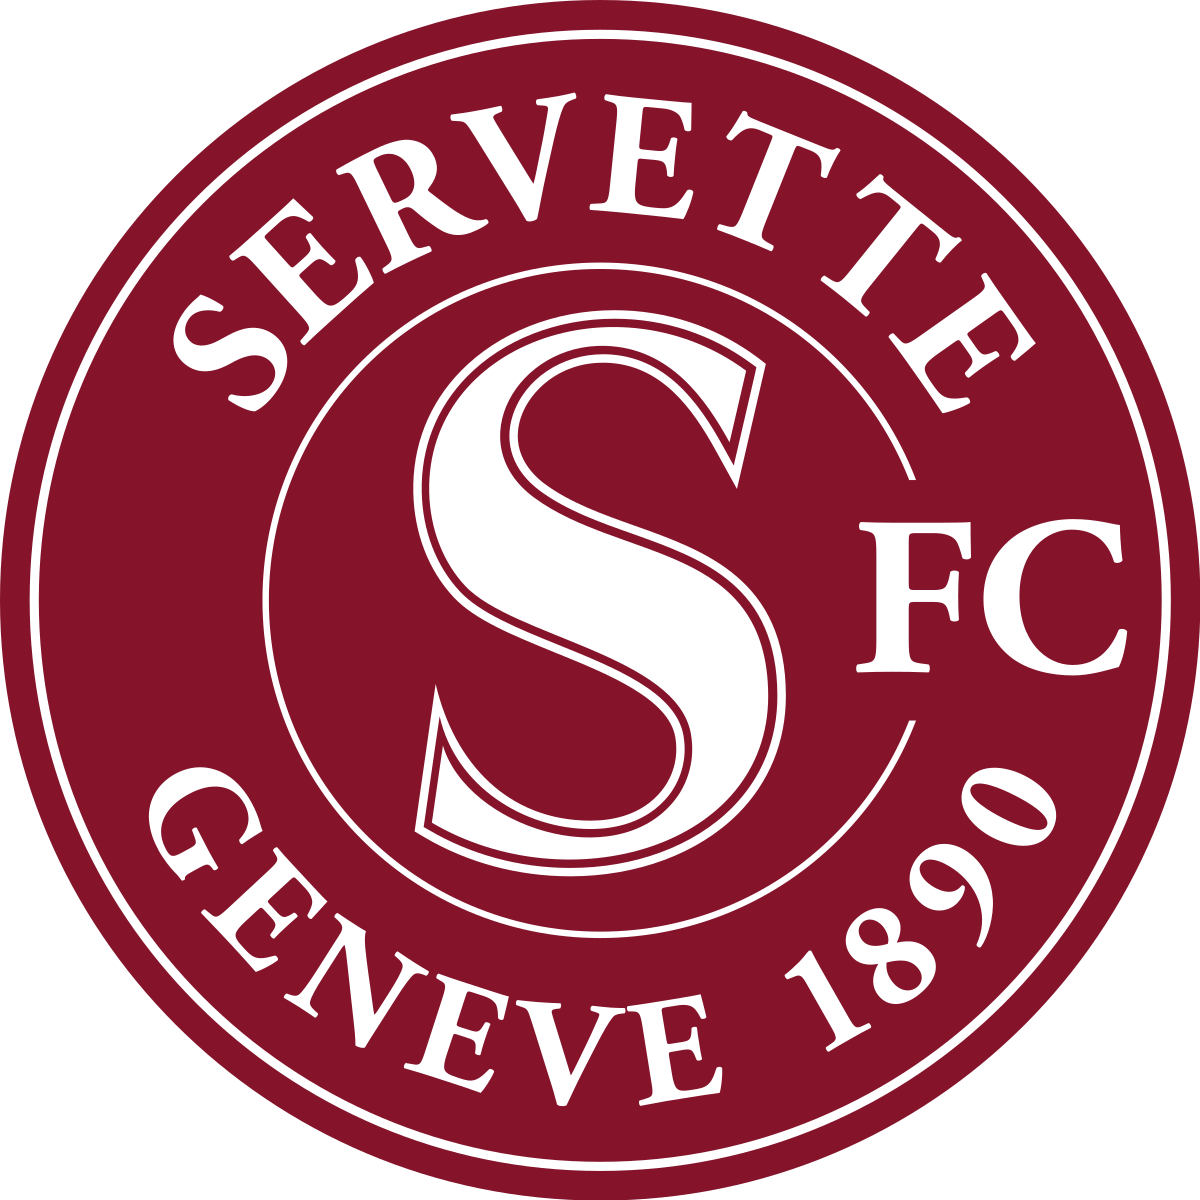 Programme TV Servette FC